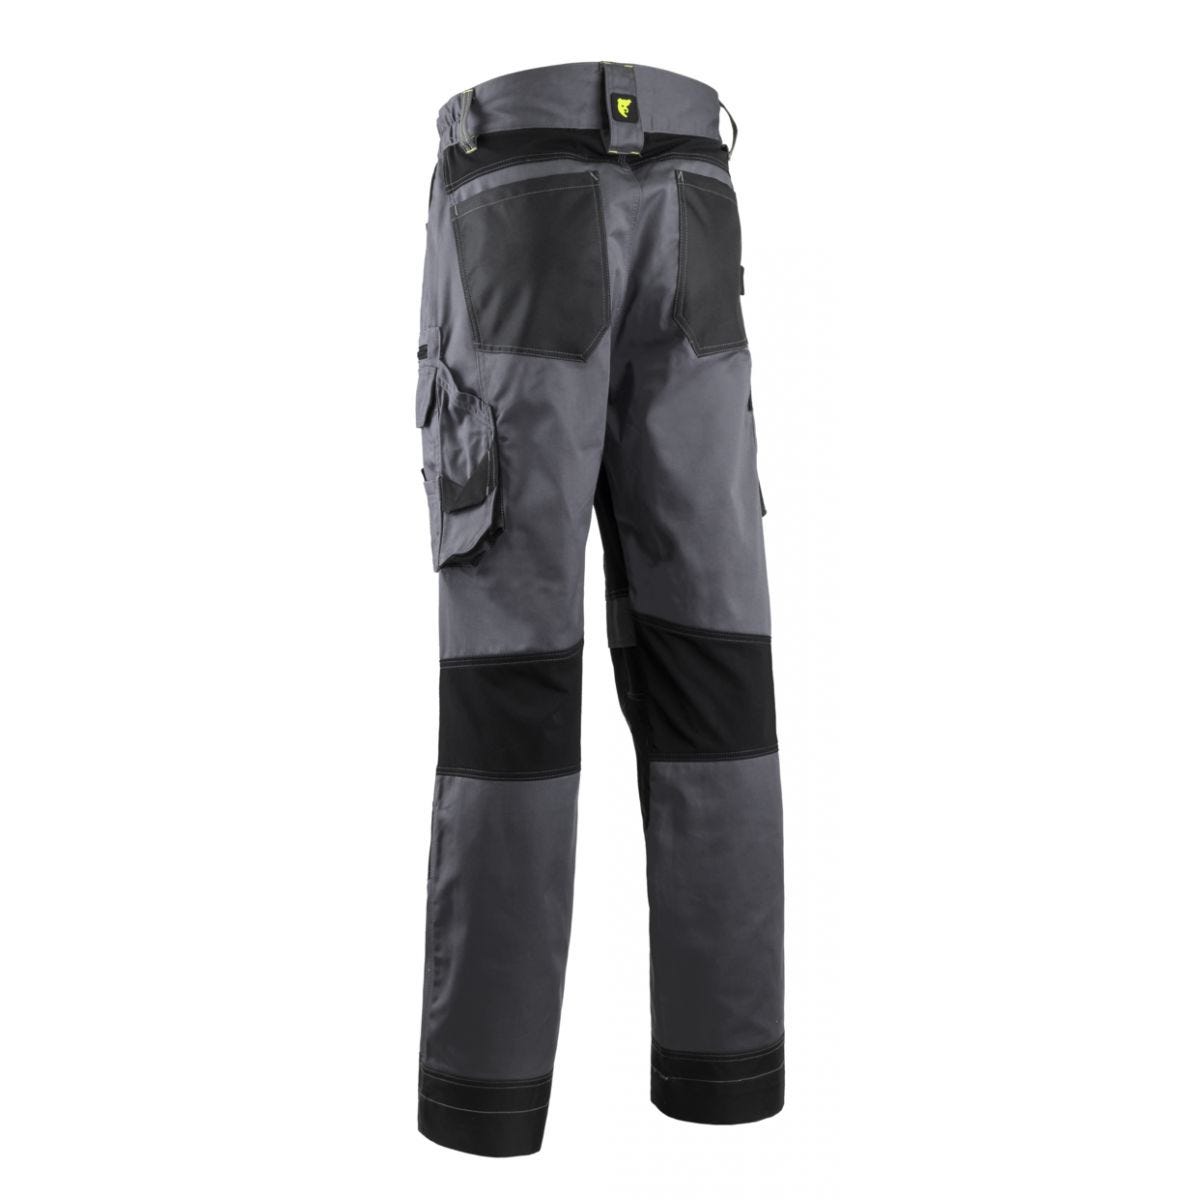 Pantalon BARU Gris/Lime - COVERGUARD - Taille M 1